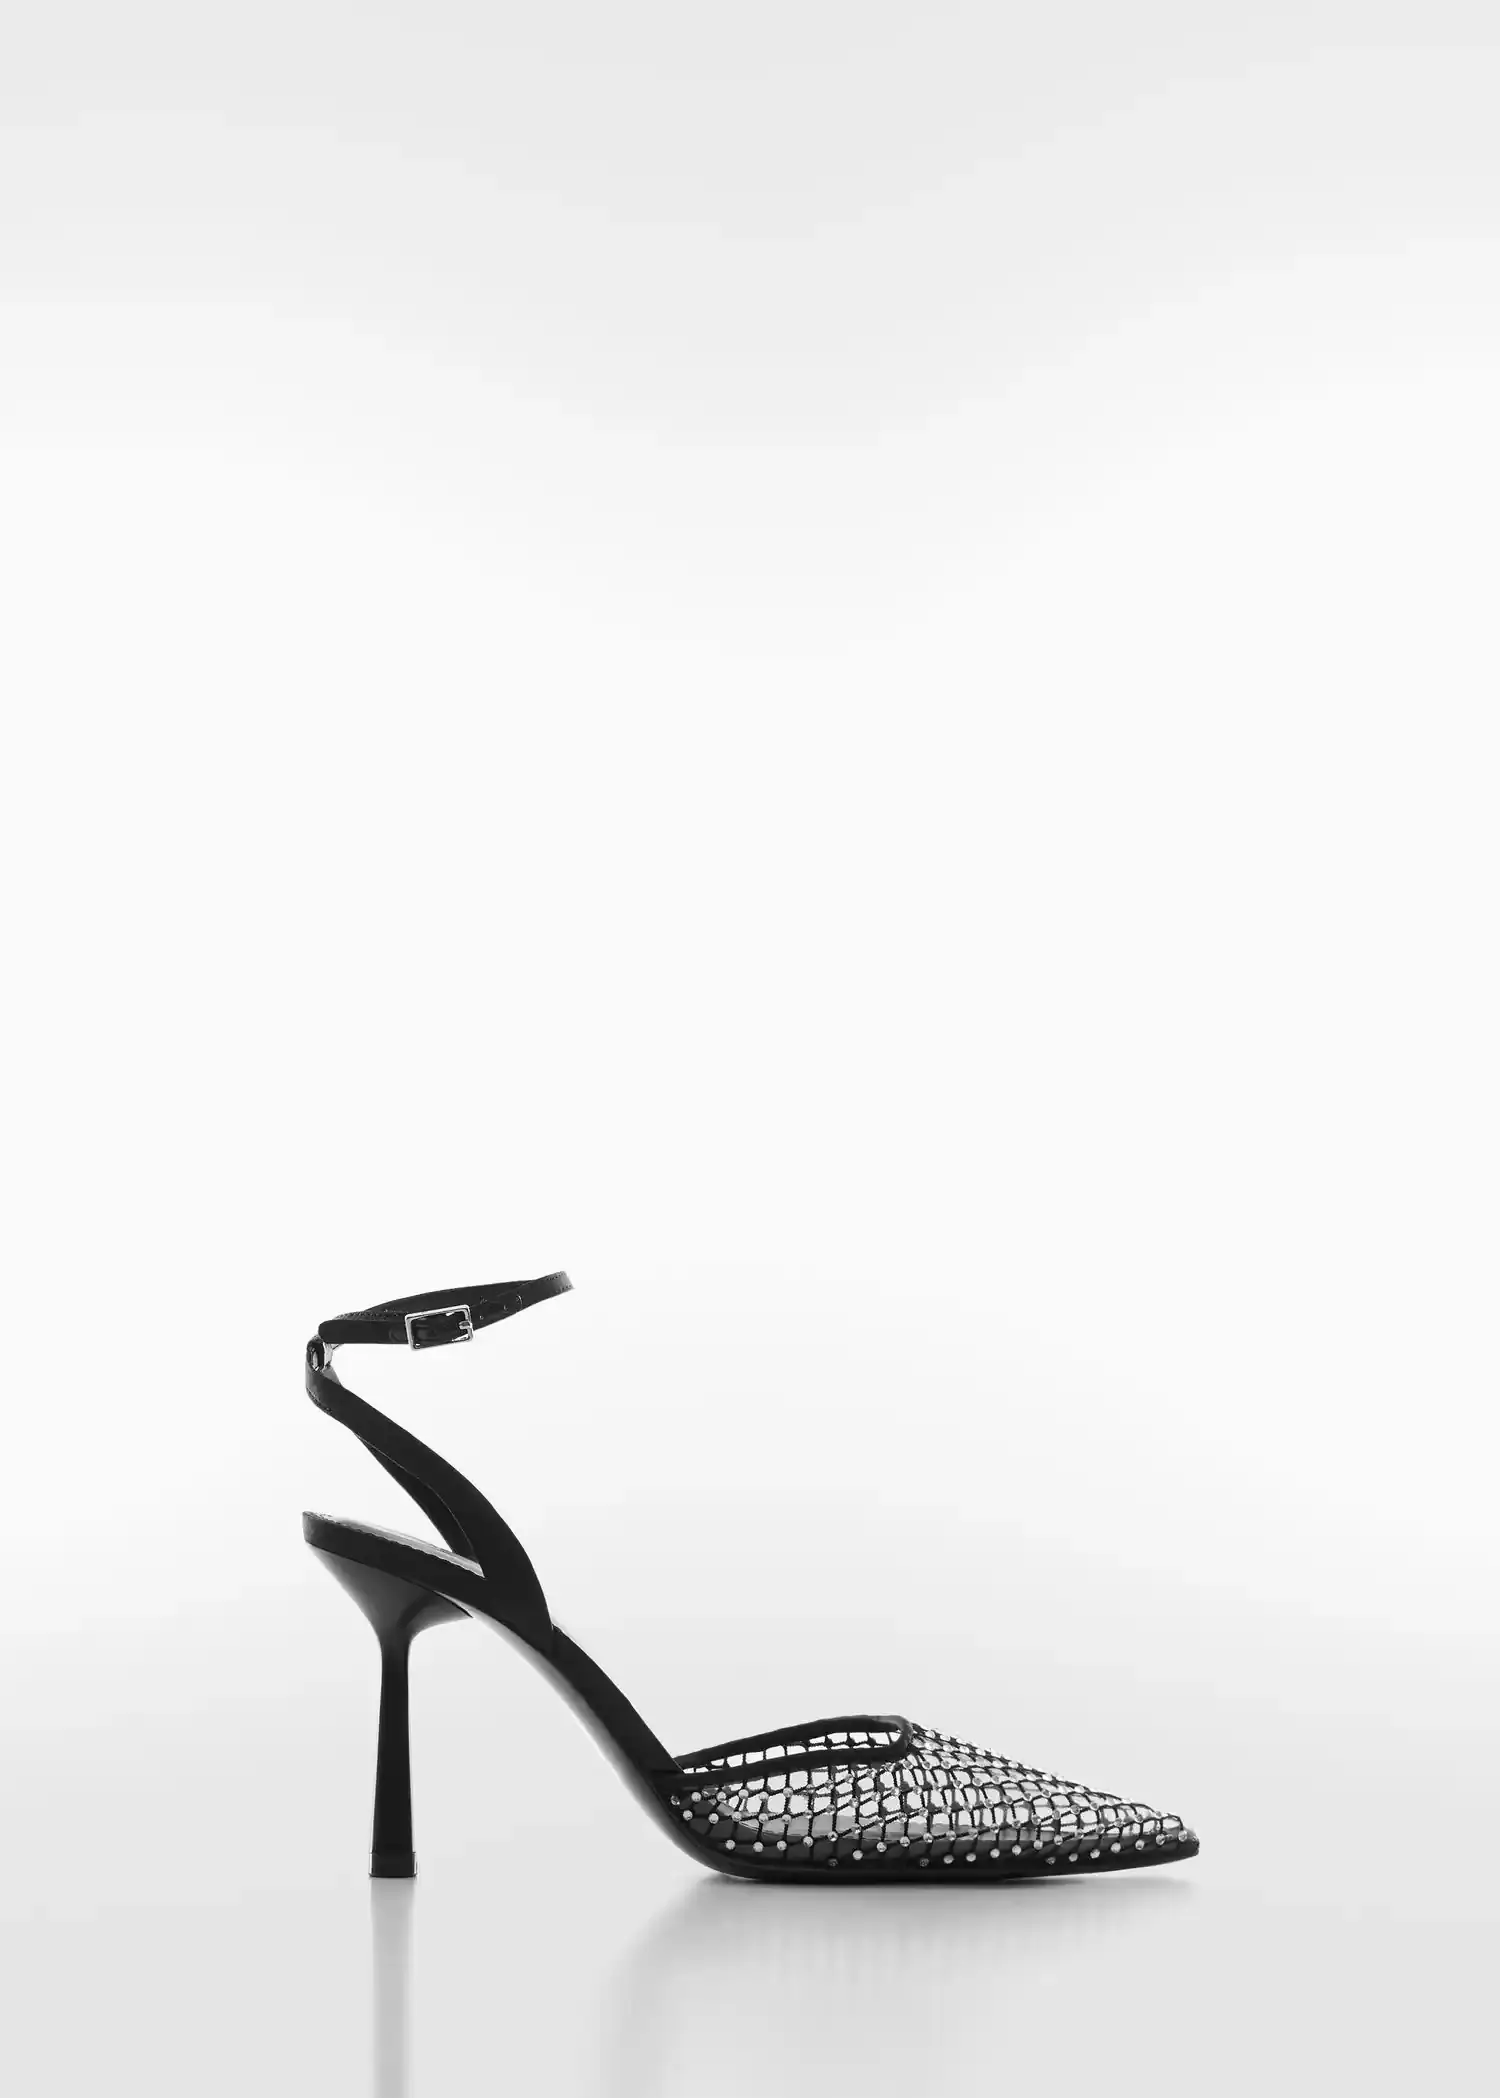 Mango Rhinestone mesh shoe. a black and white photo of a pair of high heels. 